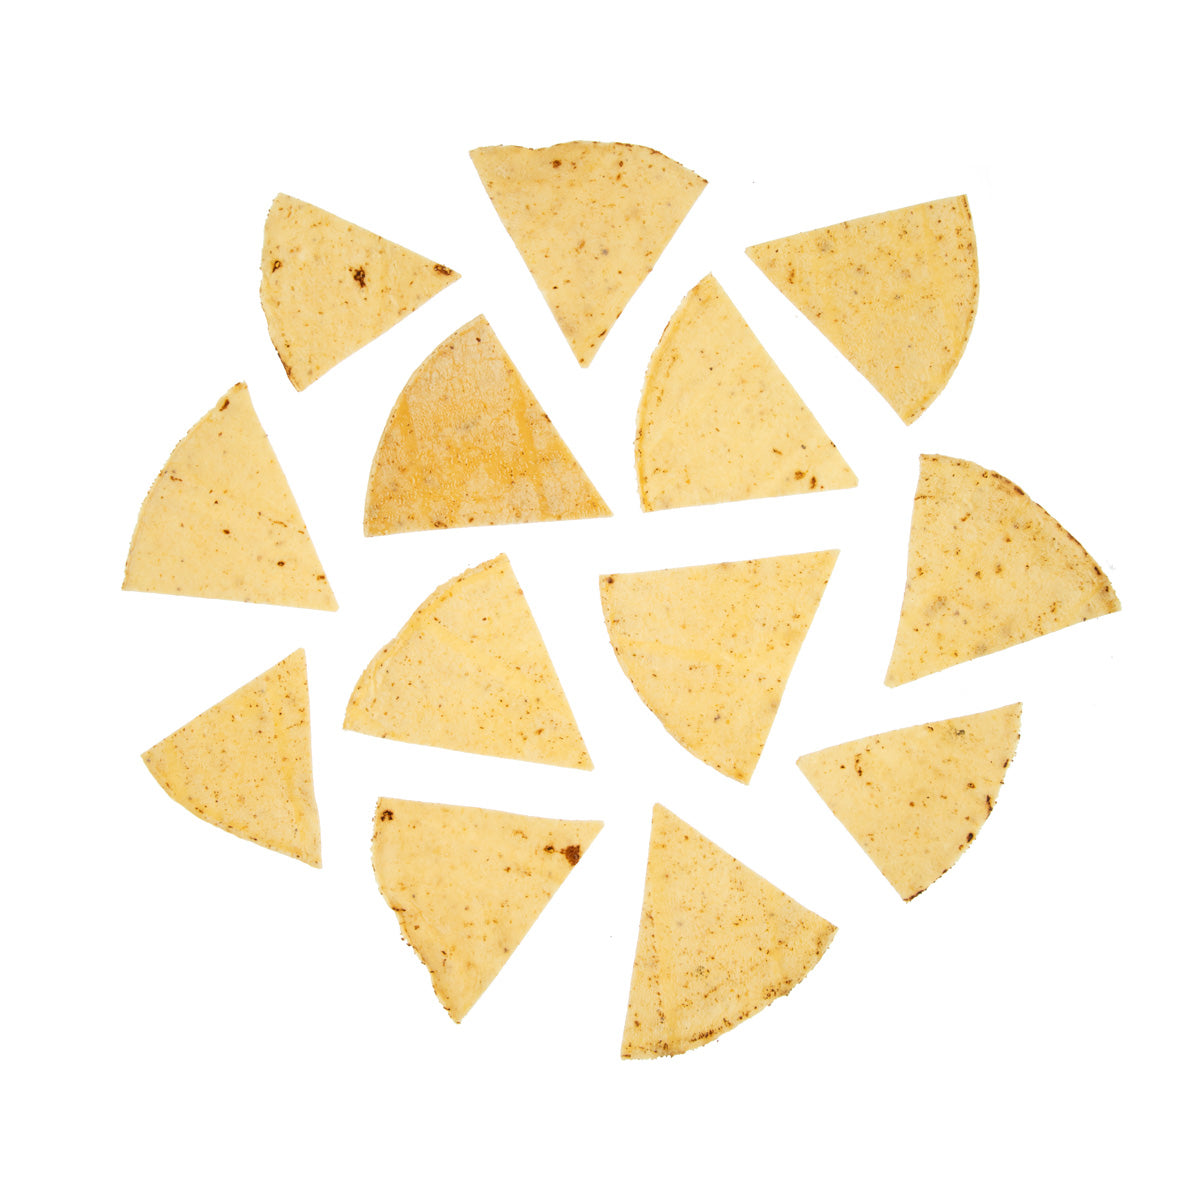 La Milpa De Rosa White Corn Tortilla Chips Bulk 1 LB